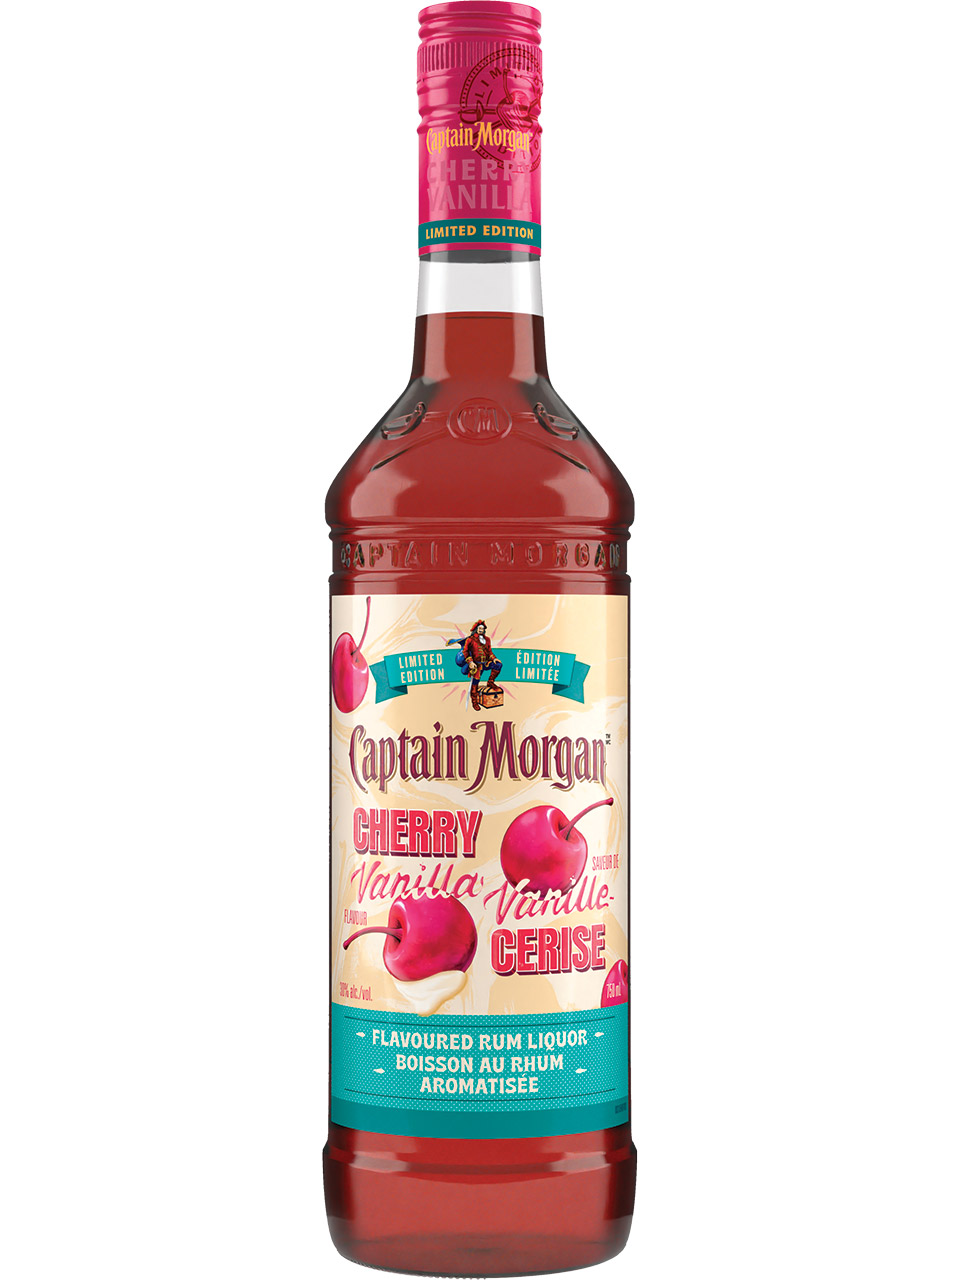 Captain Morgan Cherry Vanilla Rum